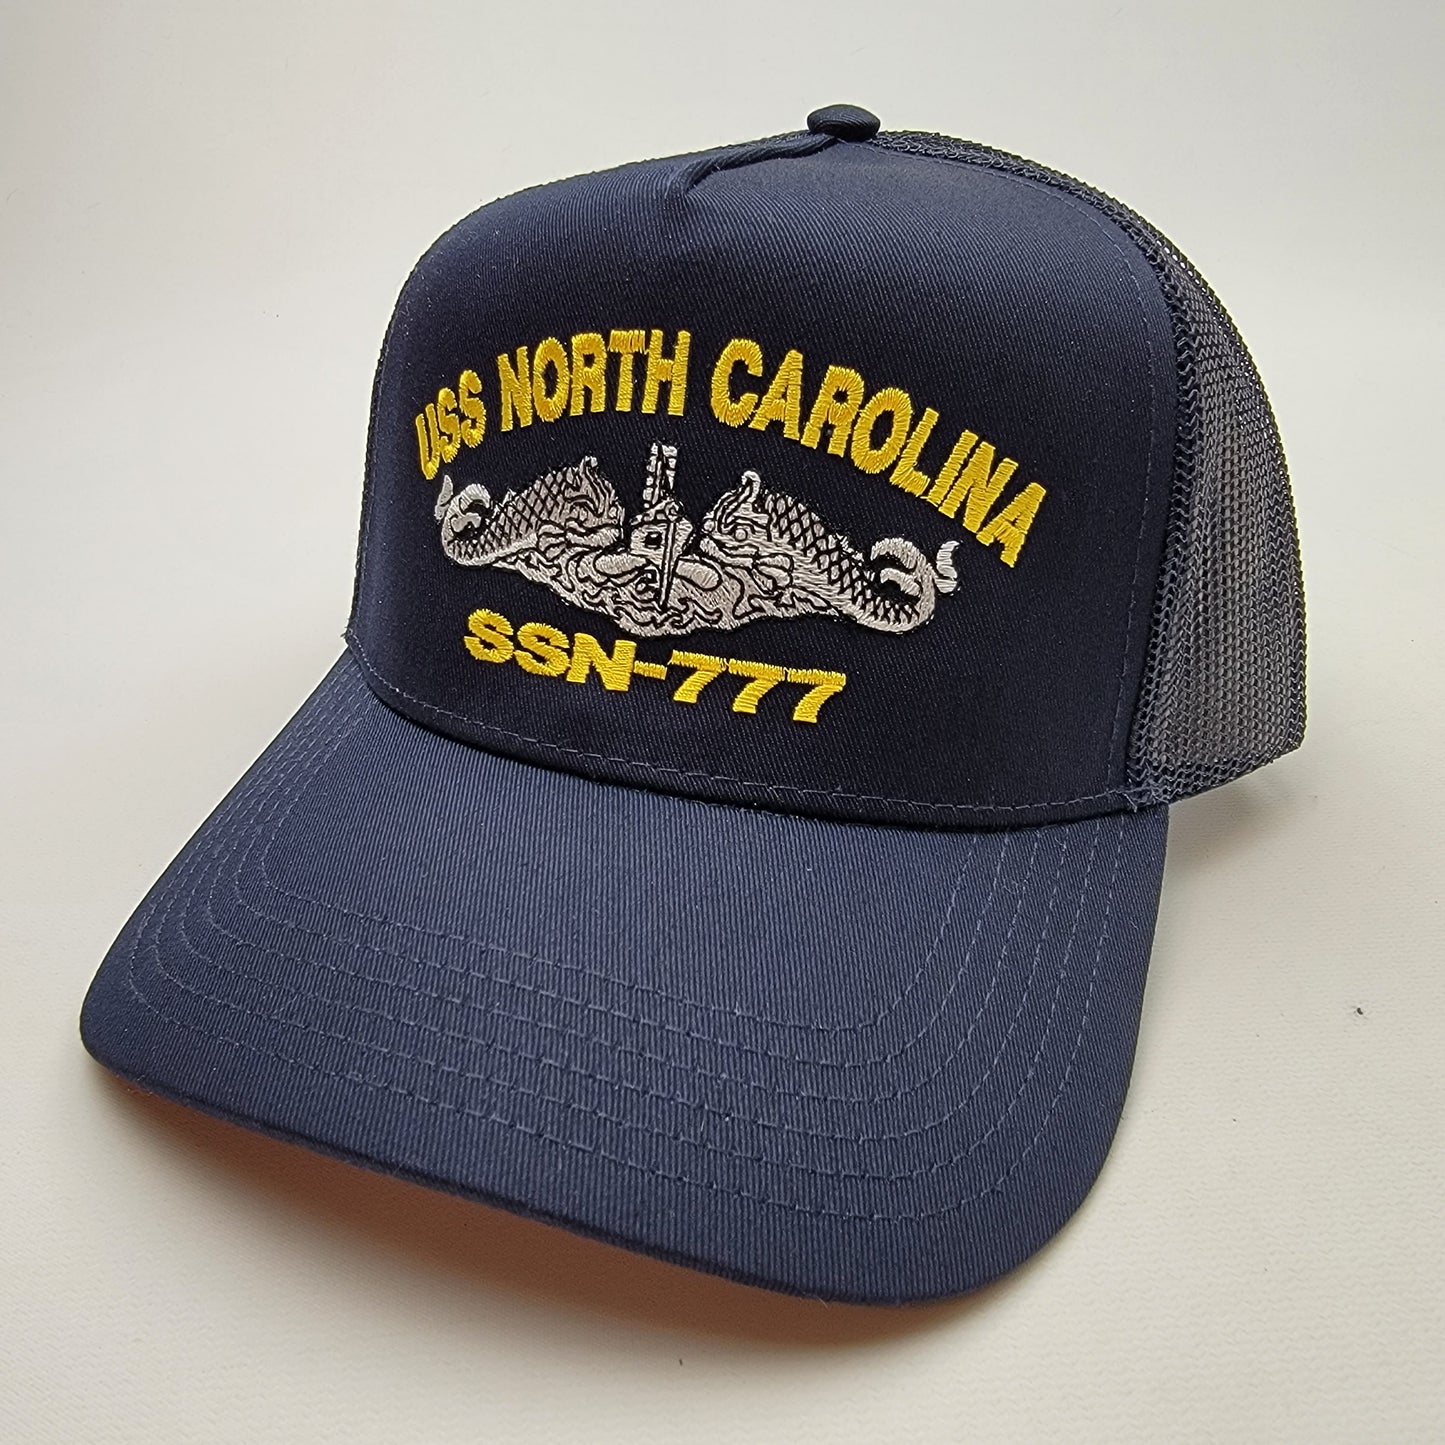 US NAVY USS NORTH CAROLINA SSN-777 Embroidered Hat Baseball Cap Adjustable Blue